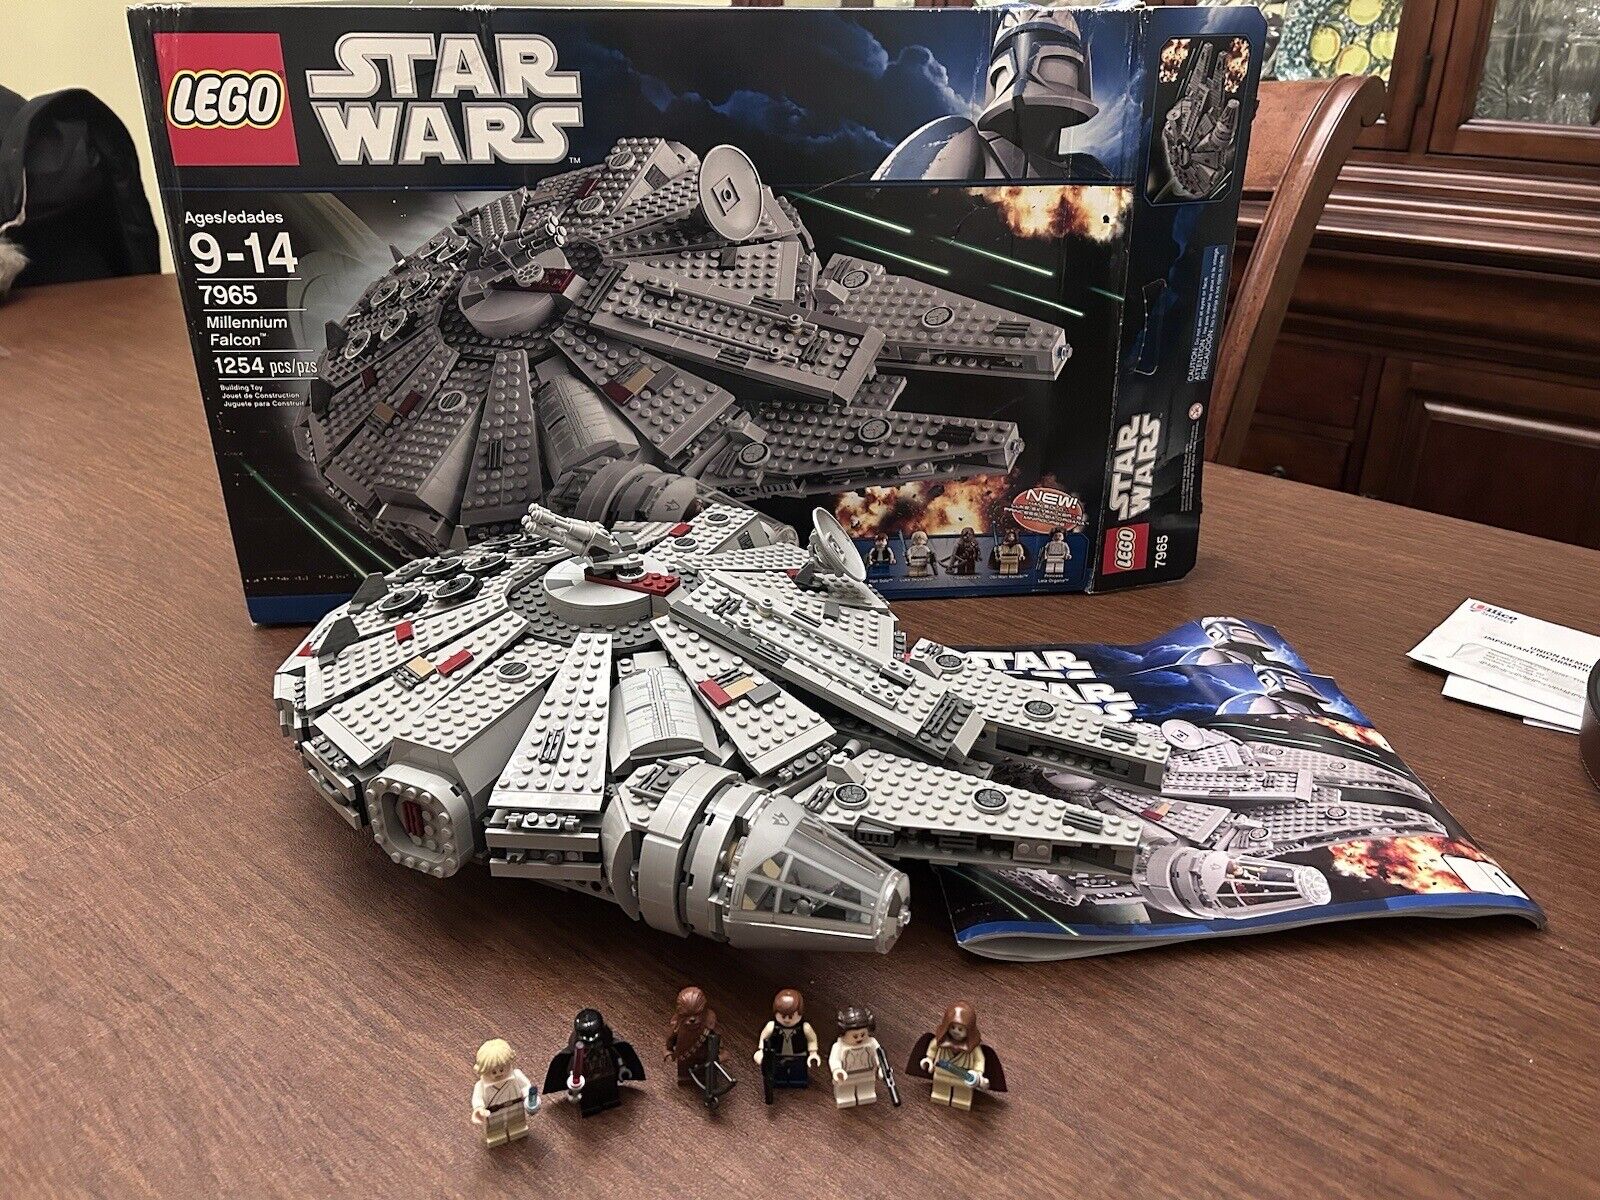 Star Wars Lego Millennium Falcon (7965) Complete Set